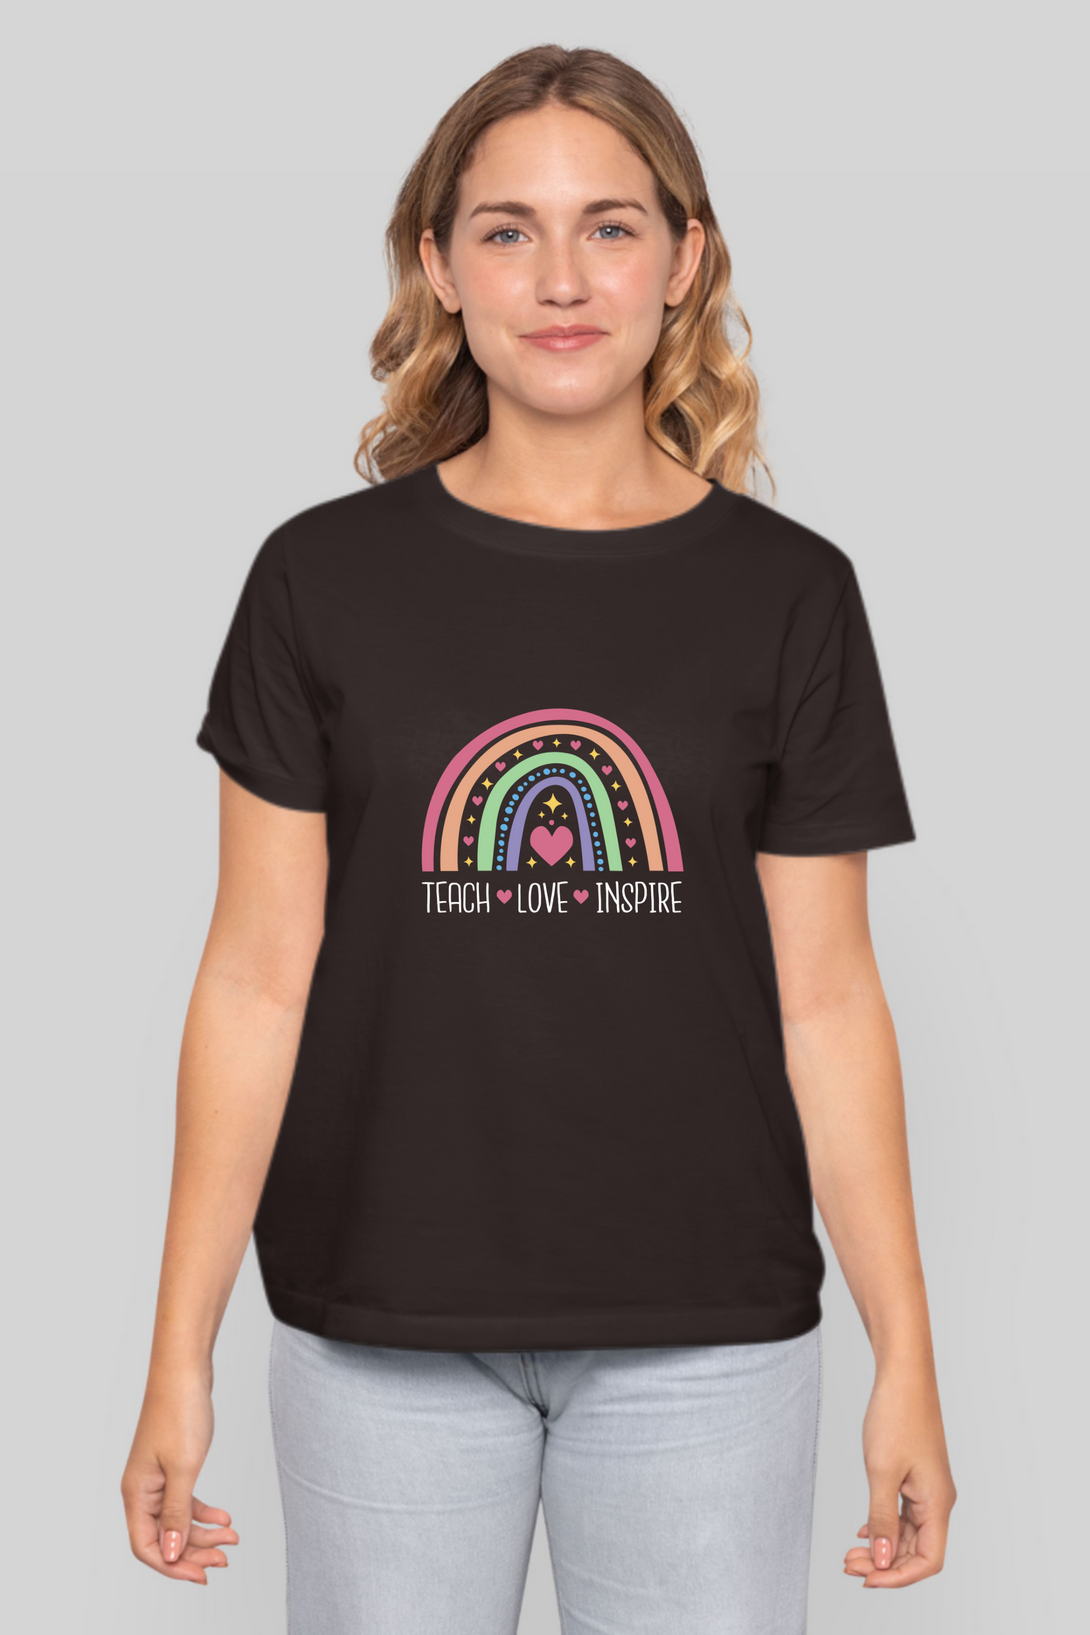 Teach, Love, Inspire Printed T-Shirt For Women - WowWaves - 6